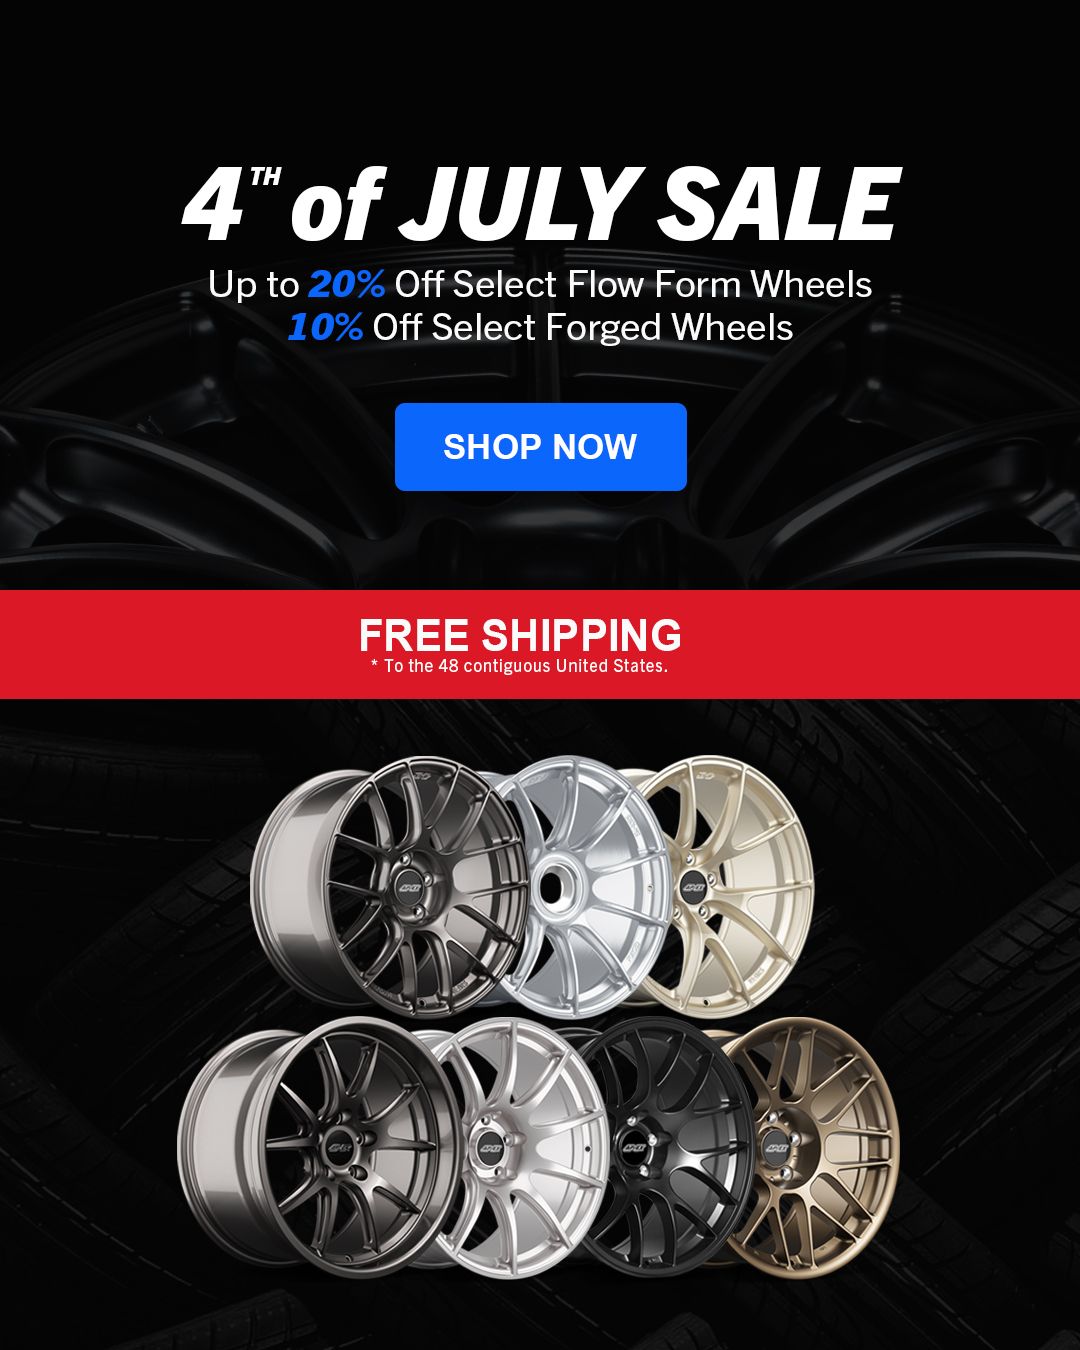 11th Gen Honda Civic APEX | 4th of July Sale - Concluded 18f05b7431f8543b042d9d7a48f1cdbb840464e5-1080x1350